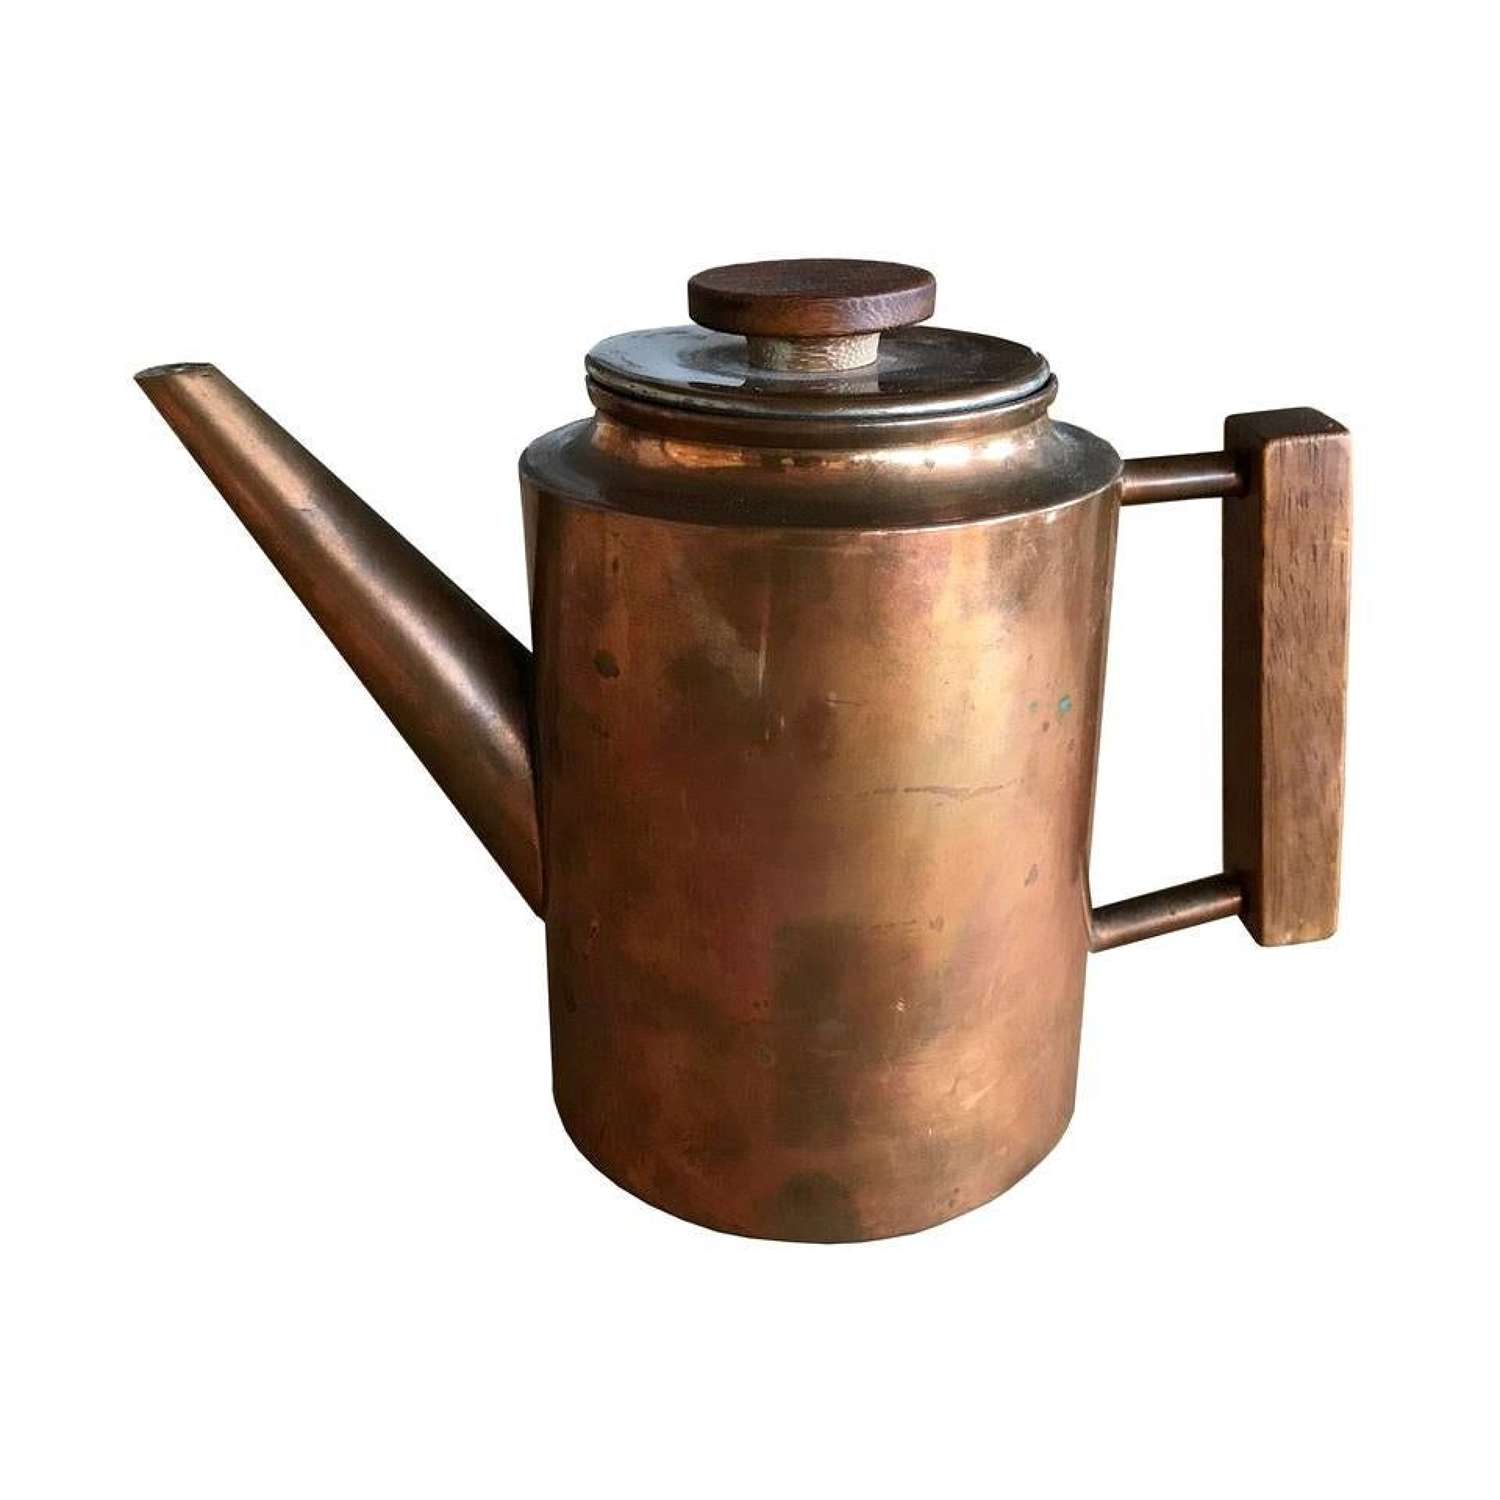 Maija Heikinheimo copper coffee pot, Valaistustyö Ky for Artek Finland